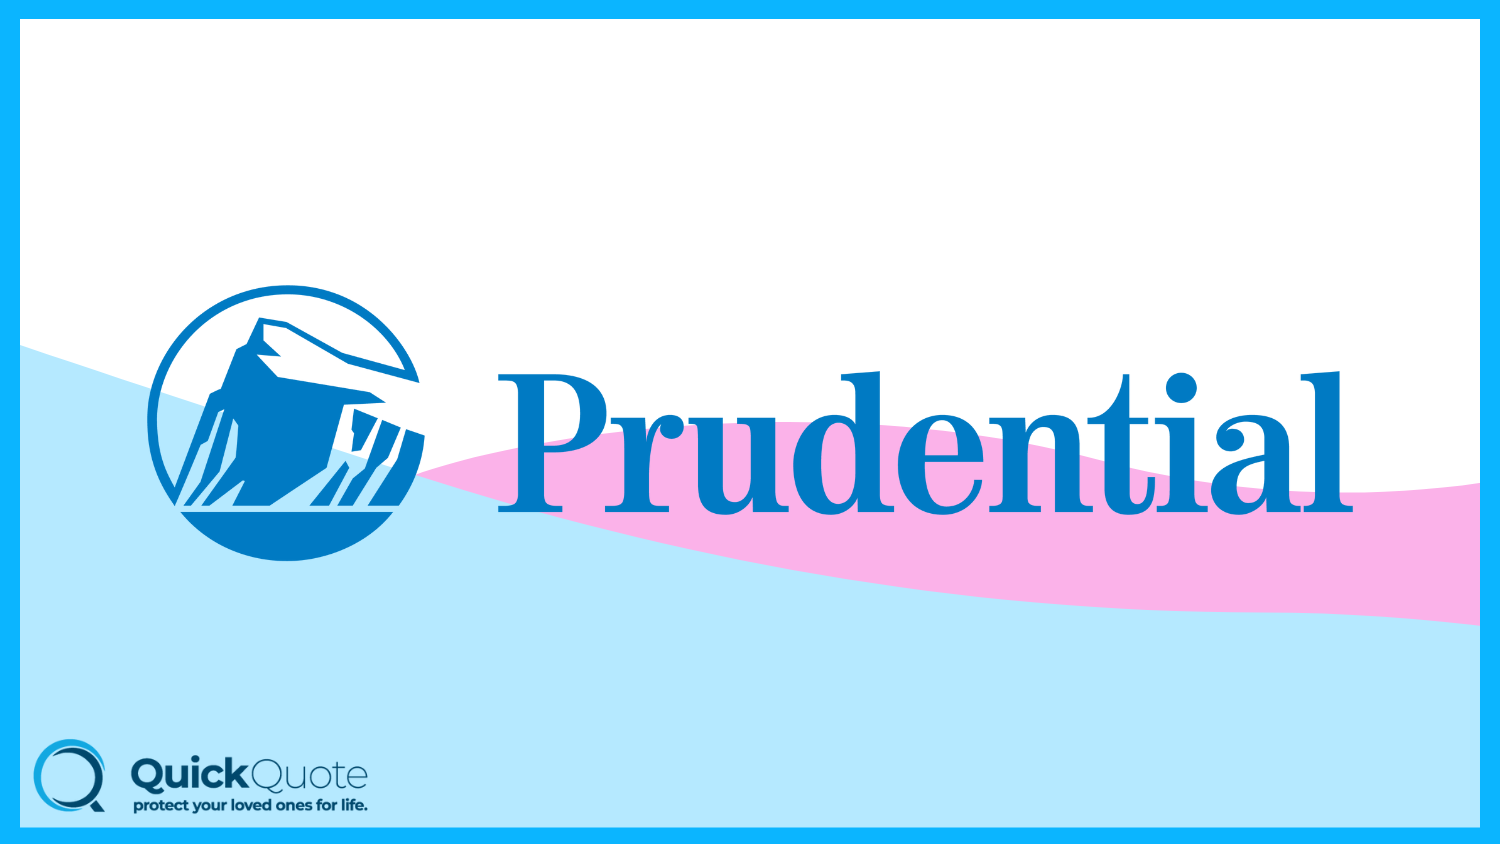 Prudential: Best Life Insurance for Seniors 